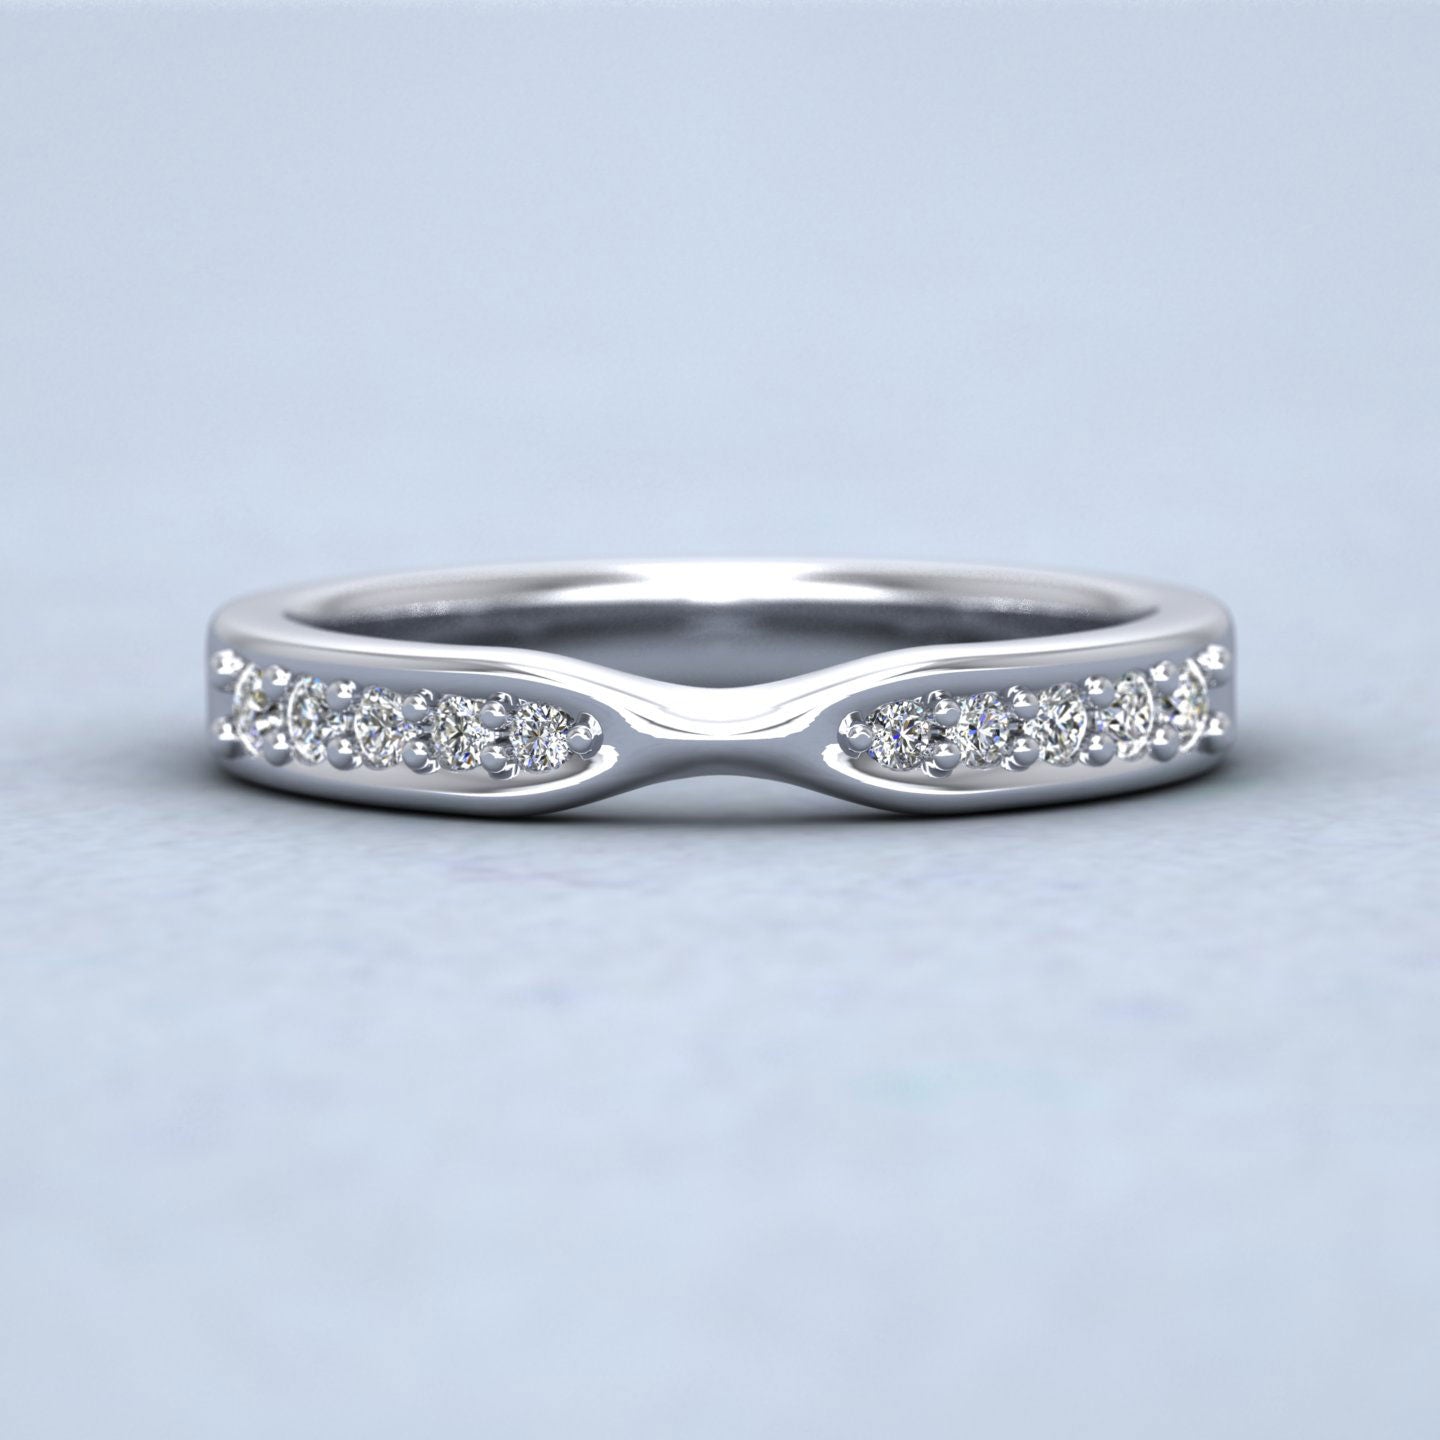 Pinch Design Wedding Ring With Diamonds 950 Platinum 3mm Wedding Ring